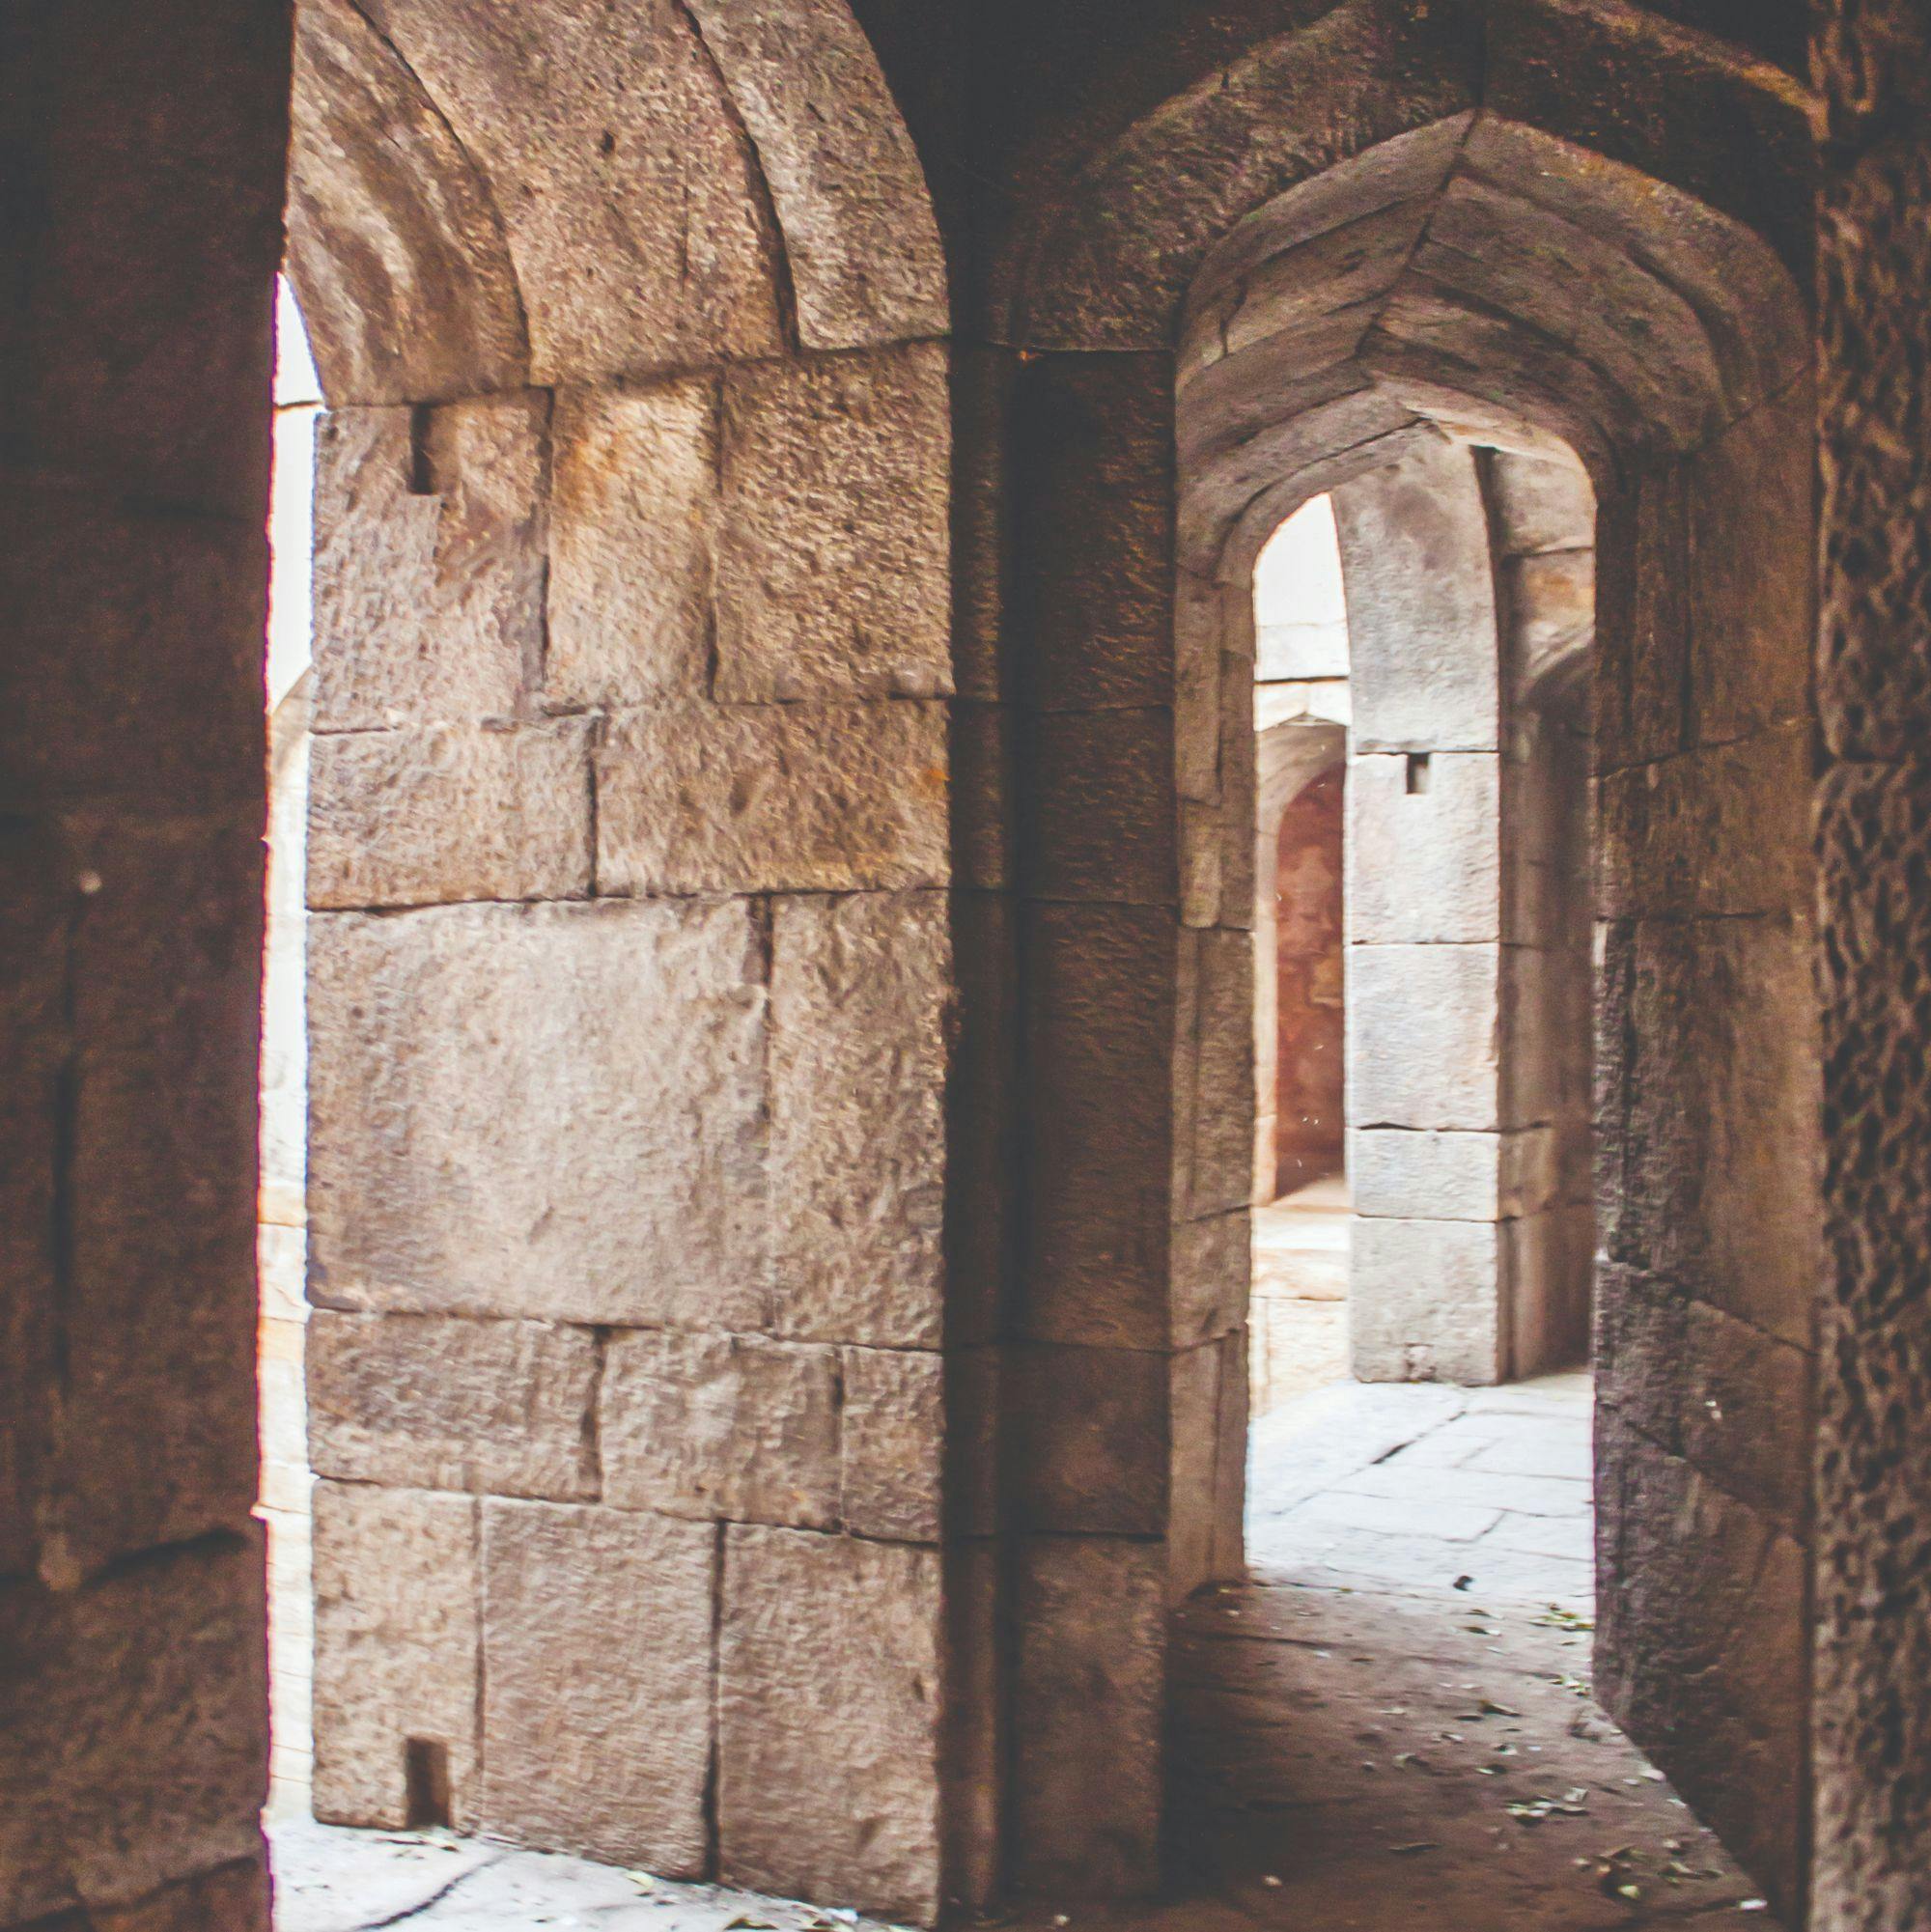 Corridors connecting the chambers of the baoli